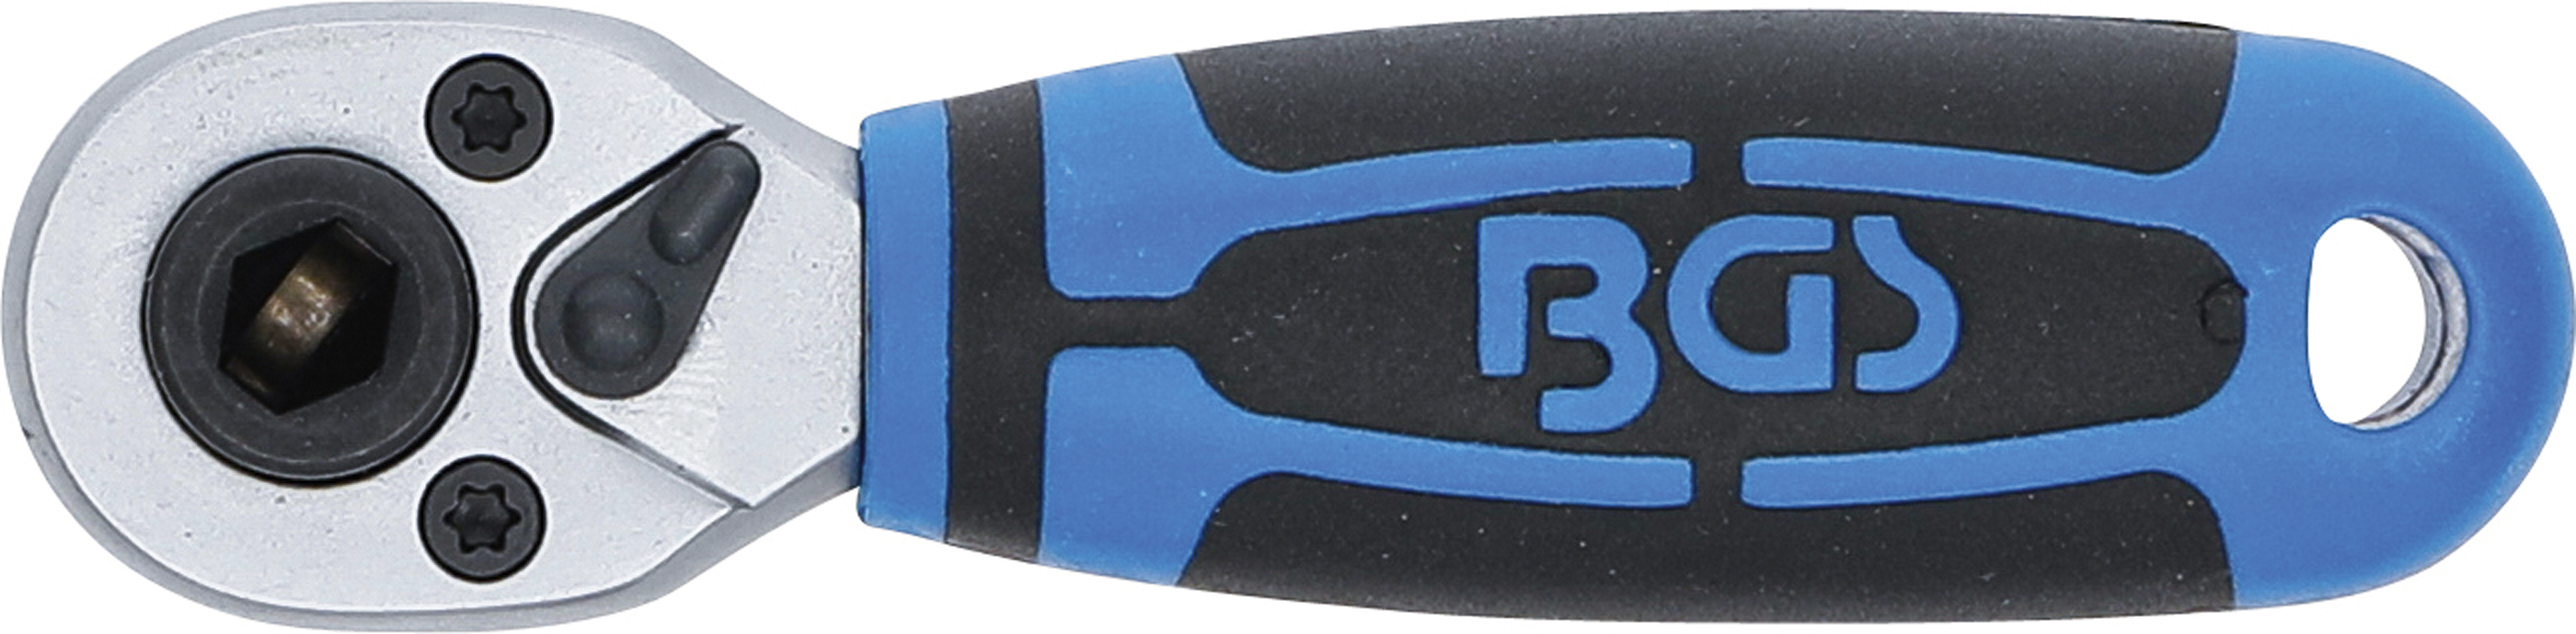 BGS Bit-Knarre | Abtrieb Innensechskant 6,3 mm (1/4")